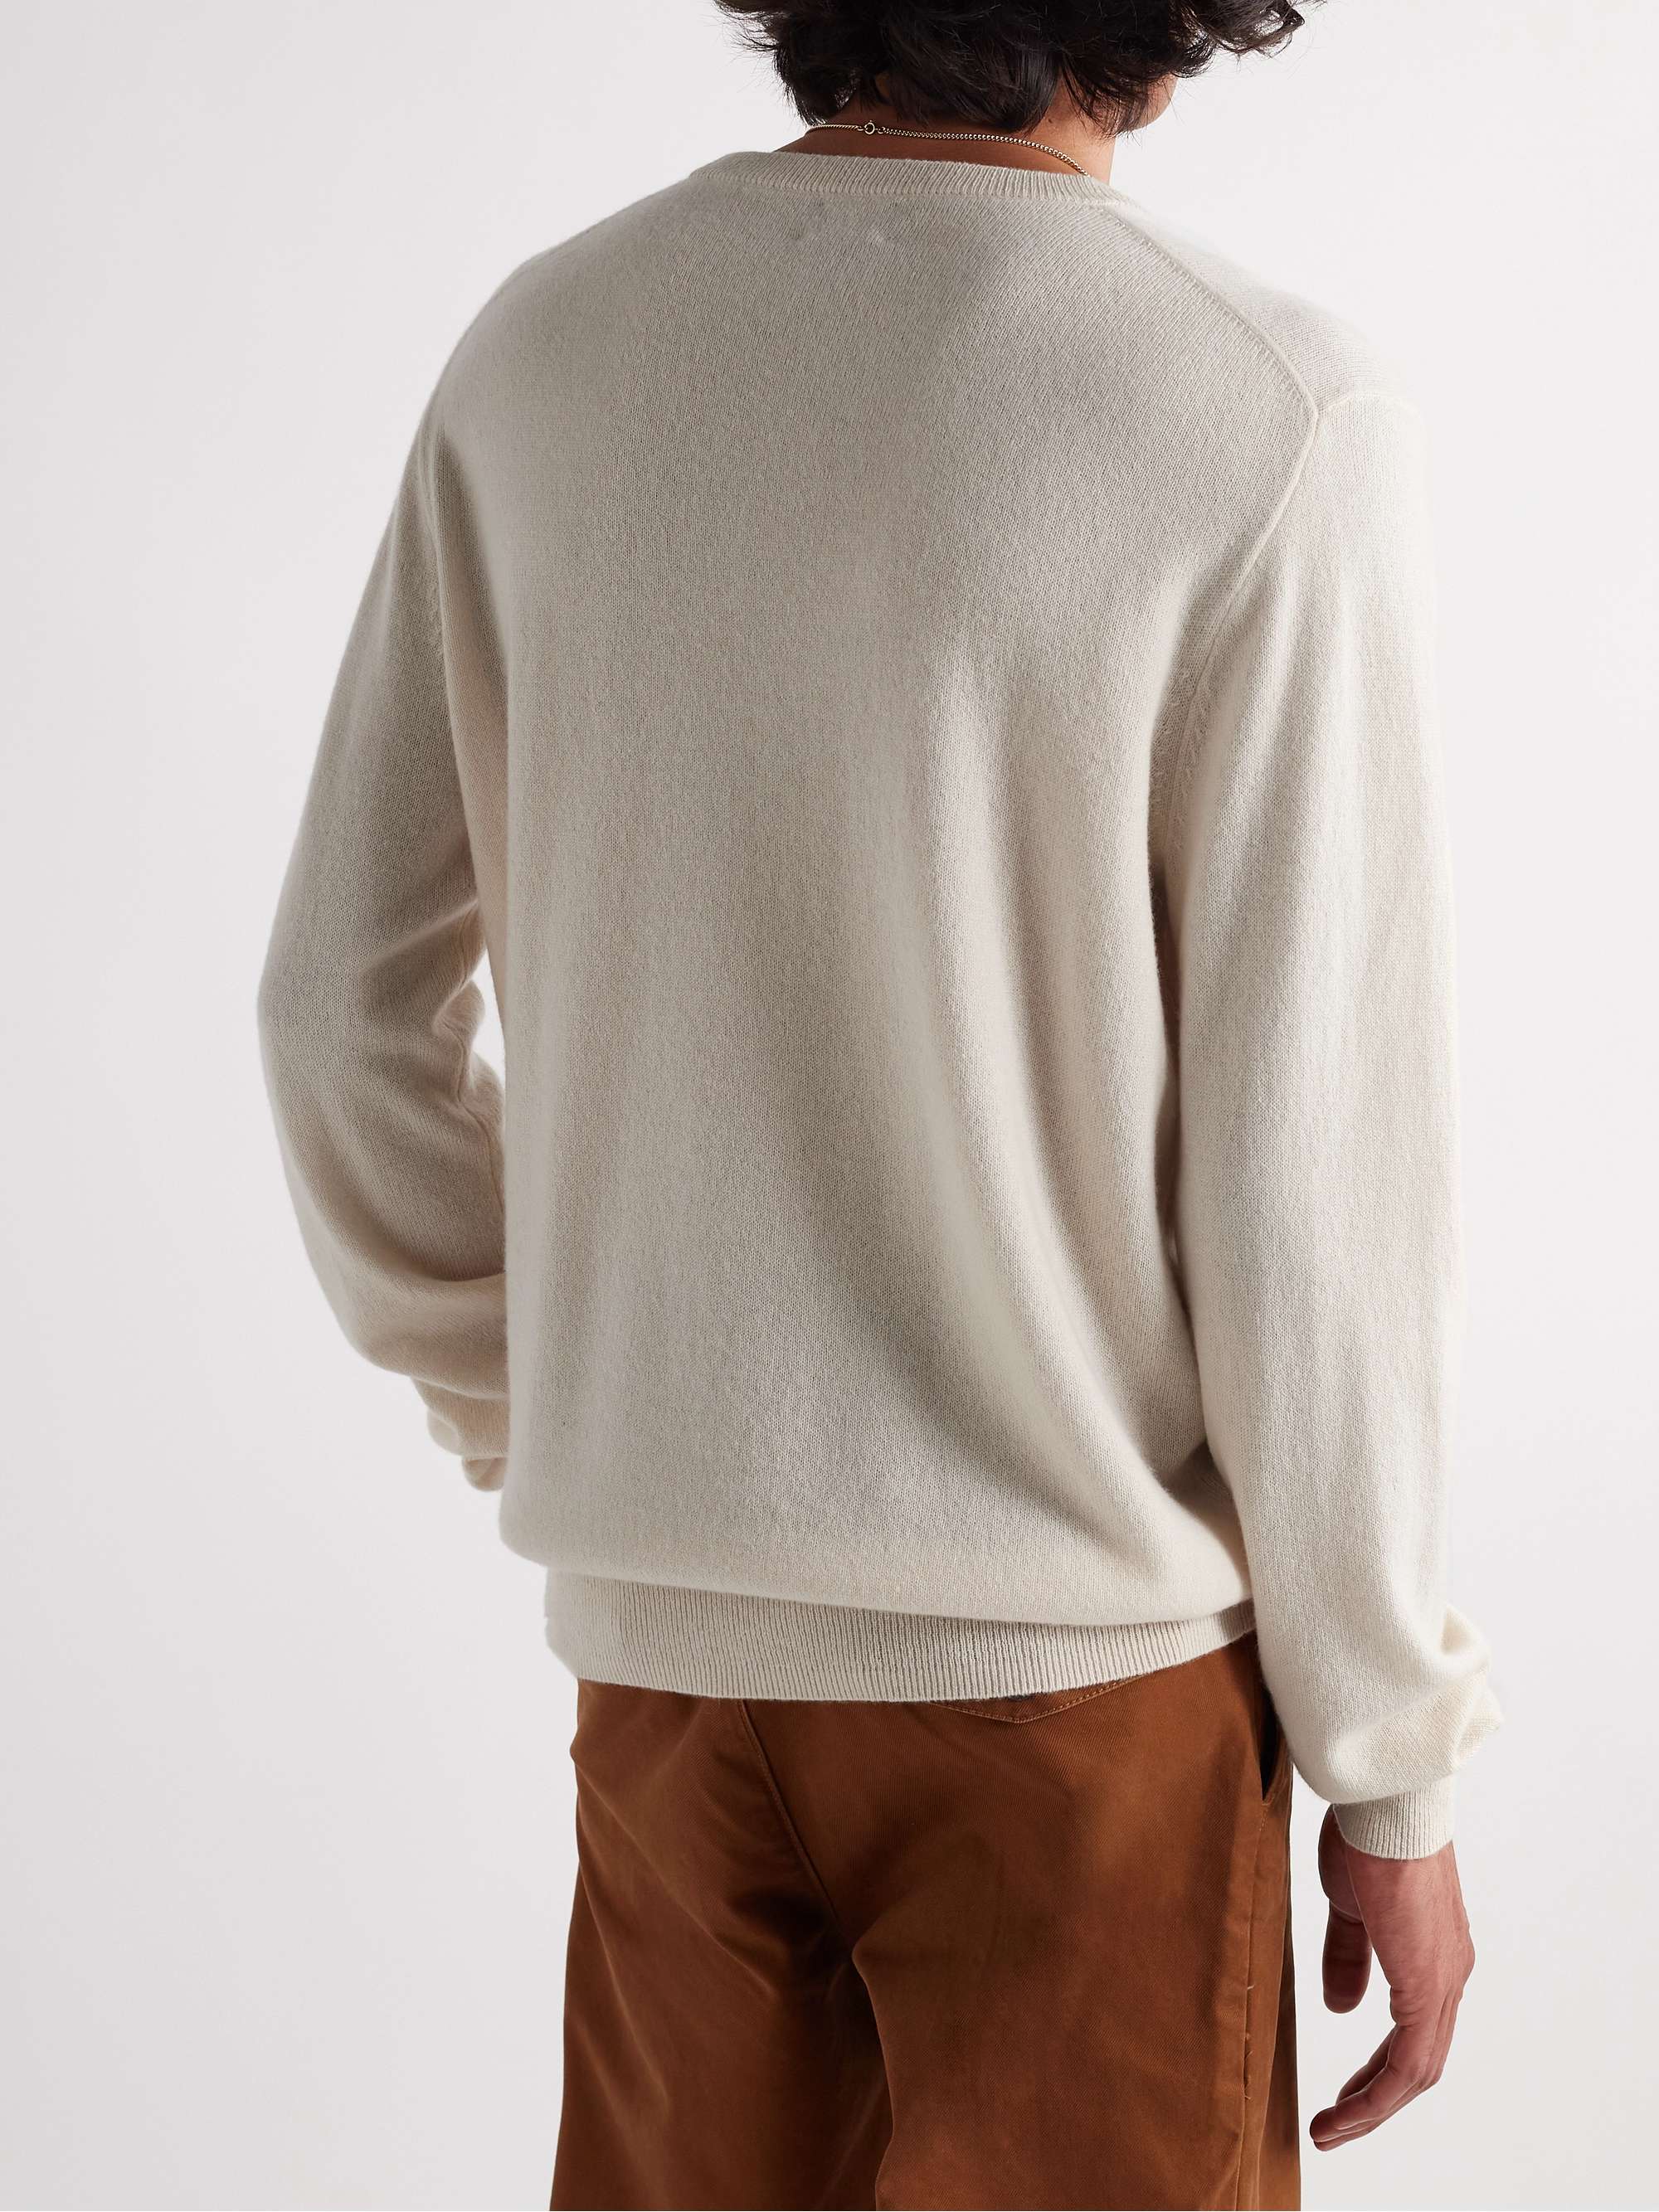 J.CREW Cashmere Sweater